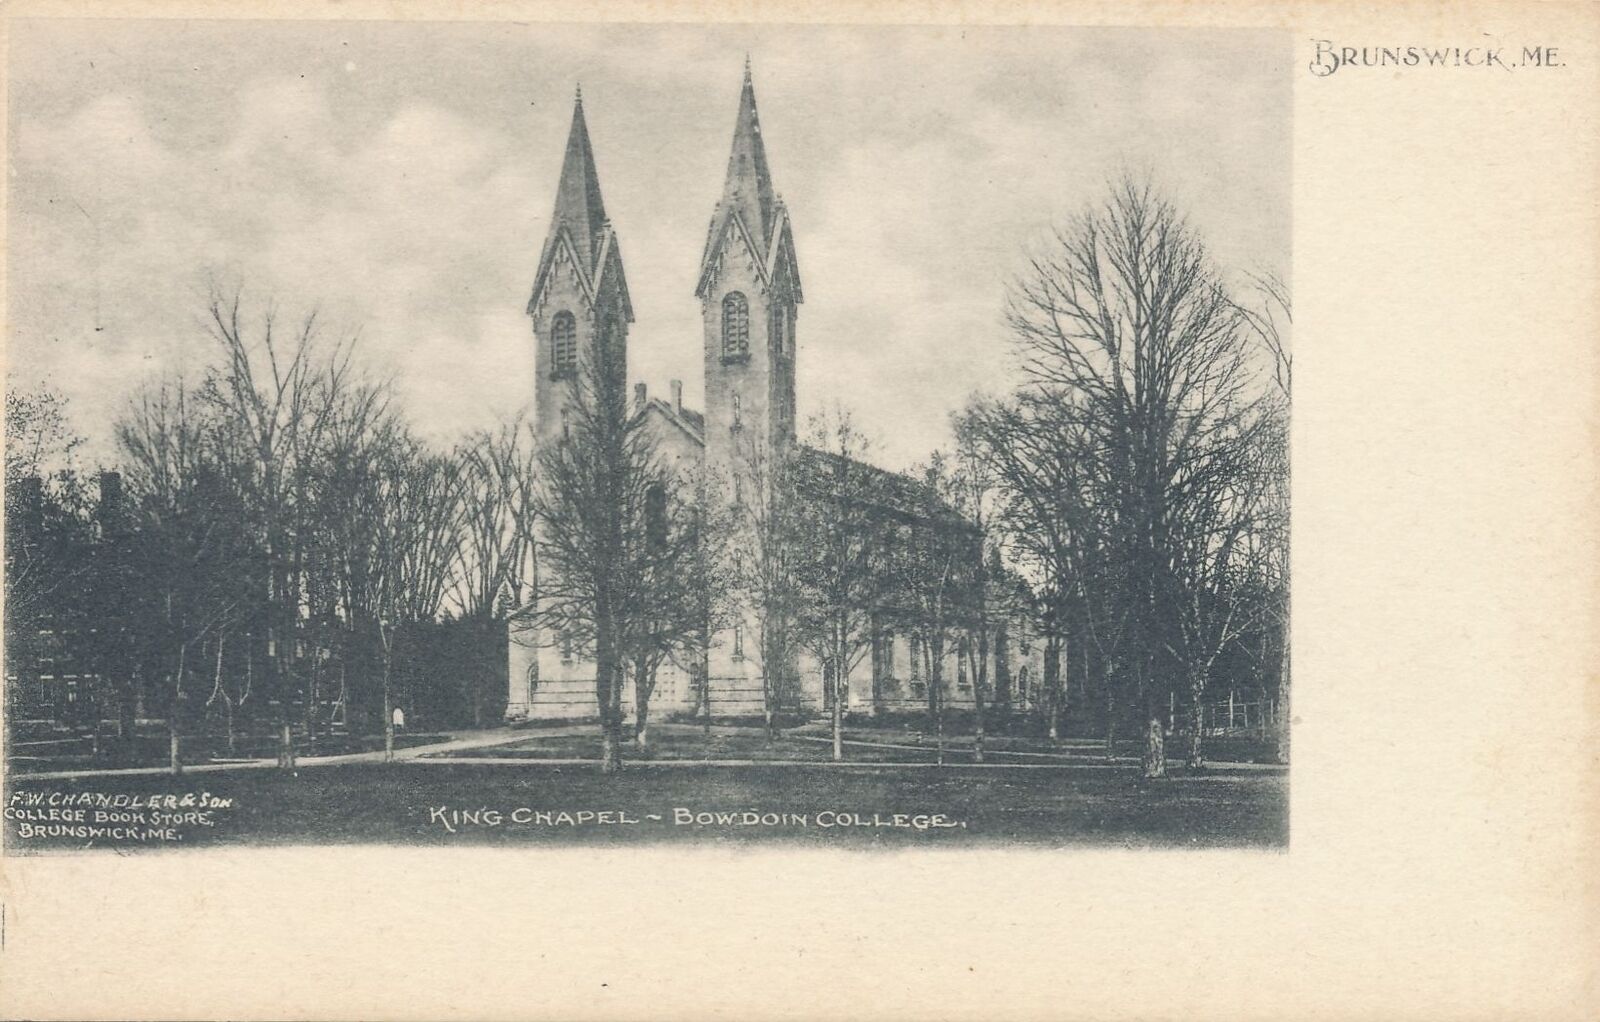 BRUNSWICK ME - Bowdoin College King Chapel Postcard - udb (pre 1908)